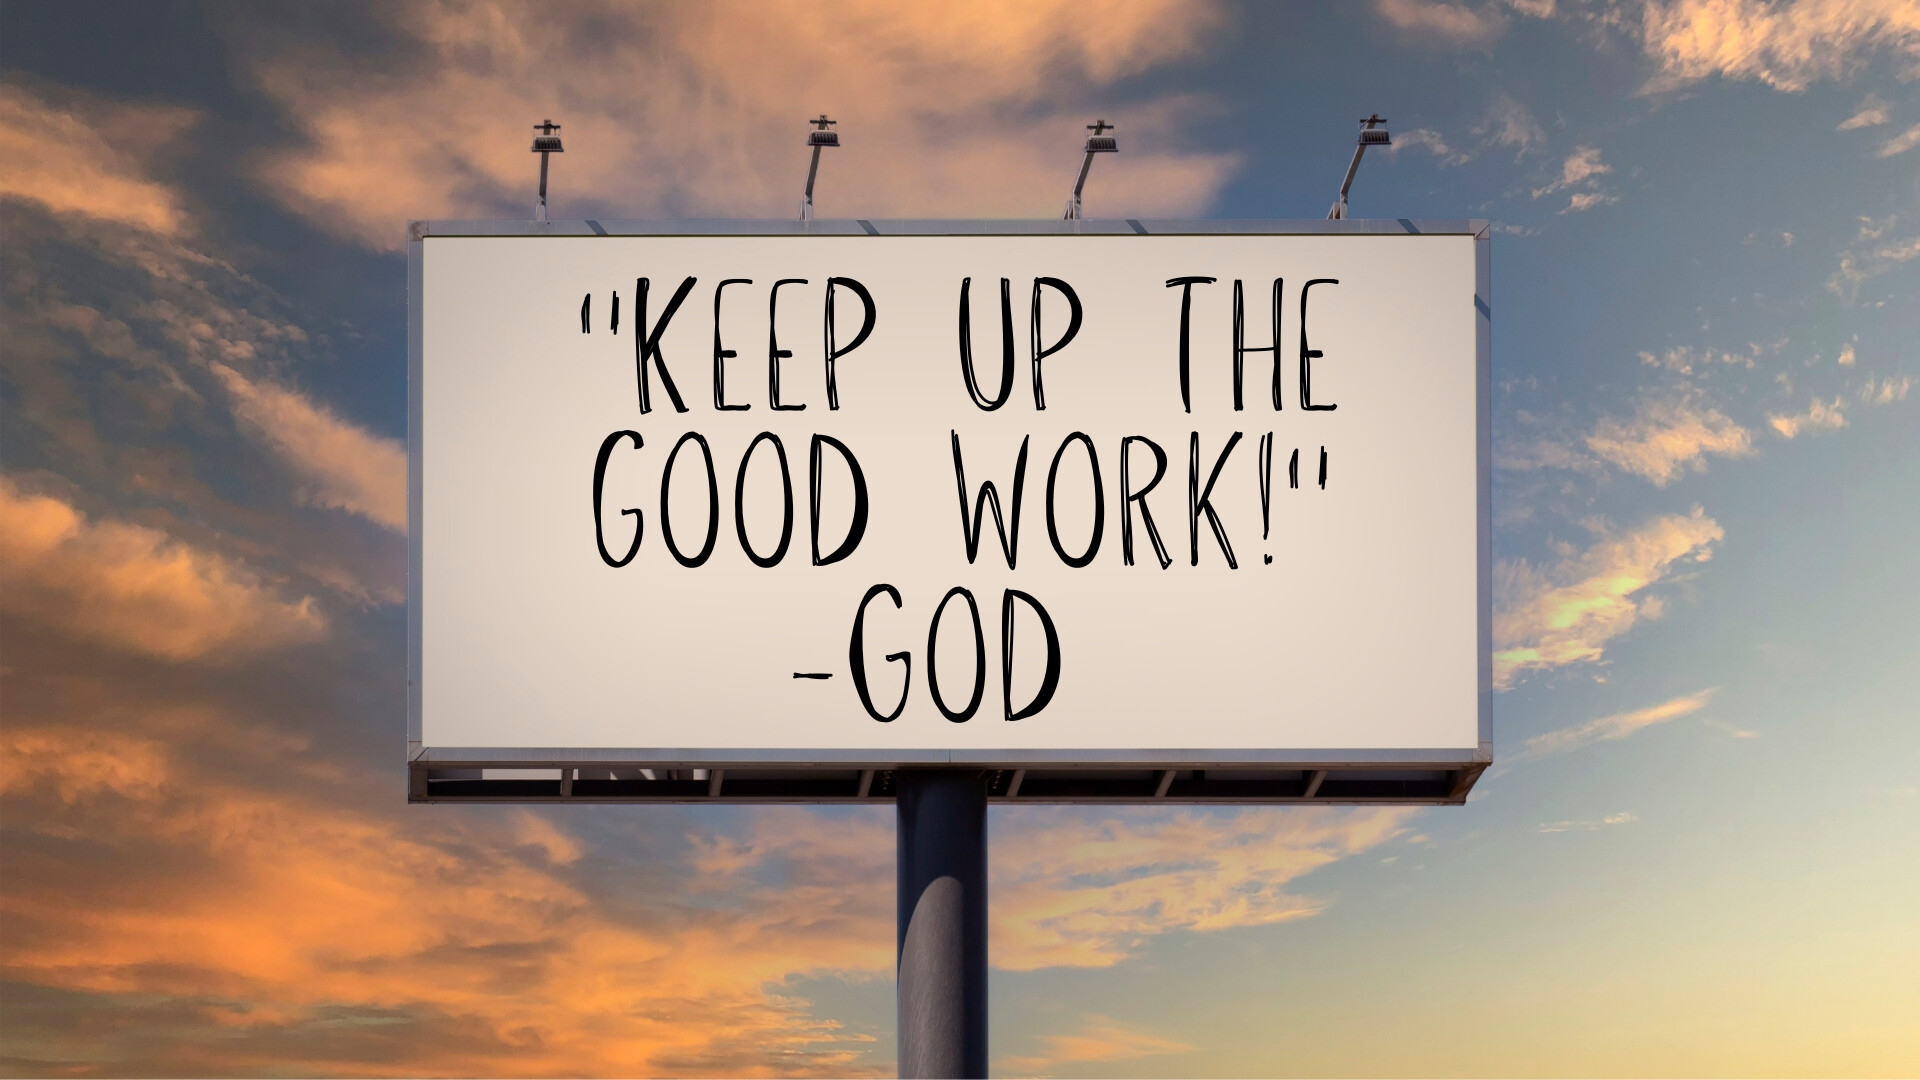 "Keep Up The Good Work!" - God